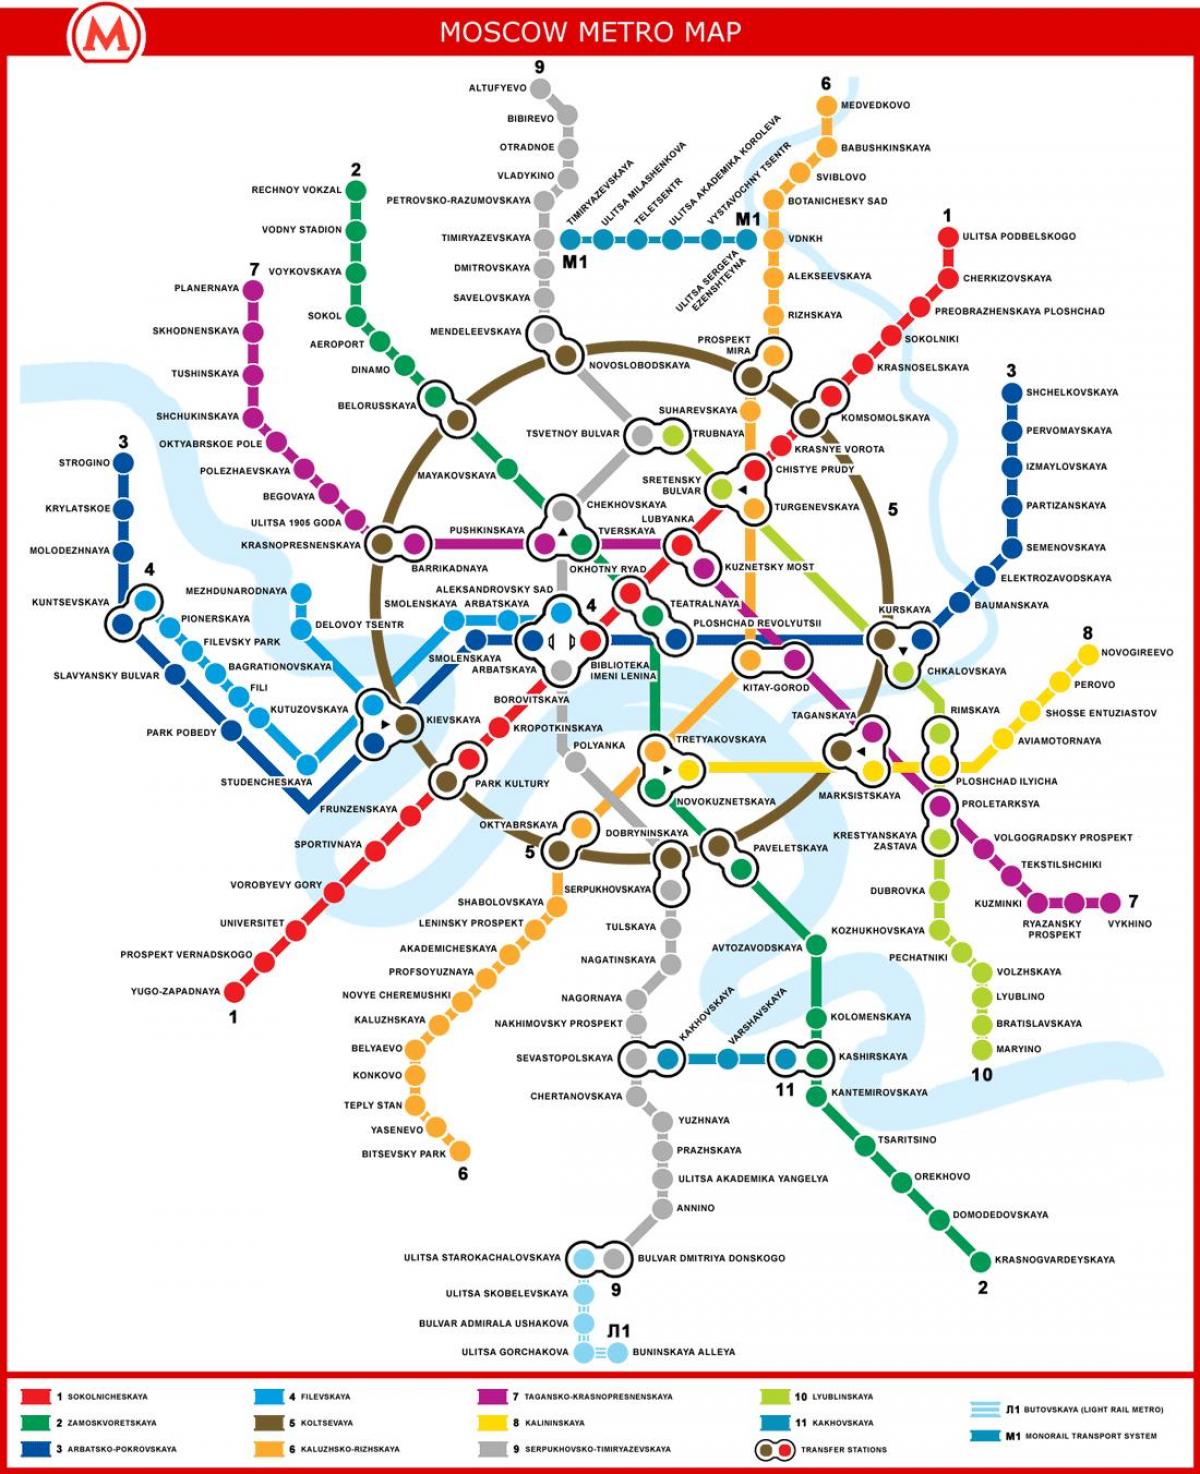 Moscow metro ramani